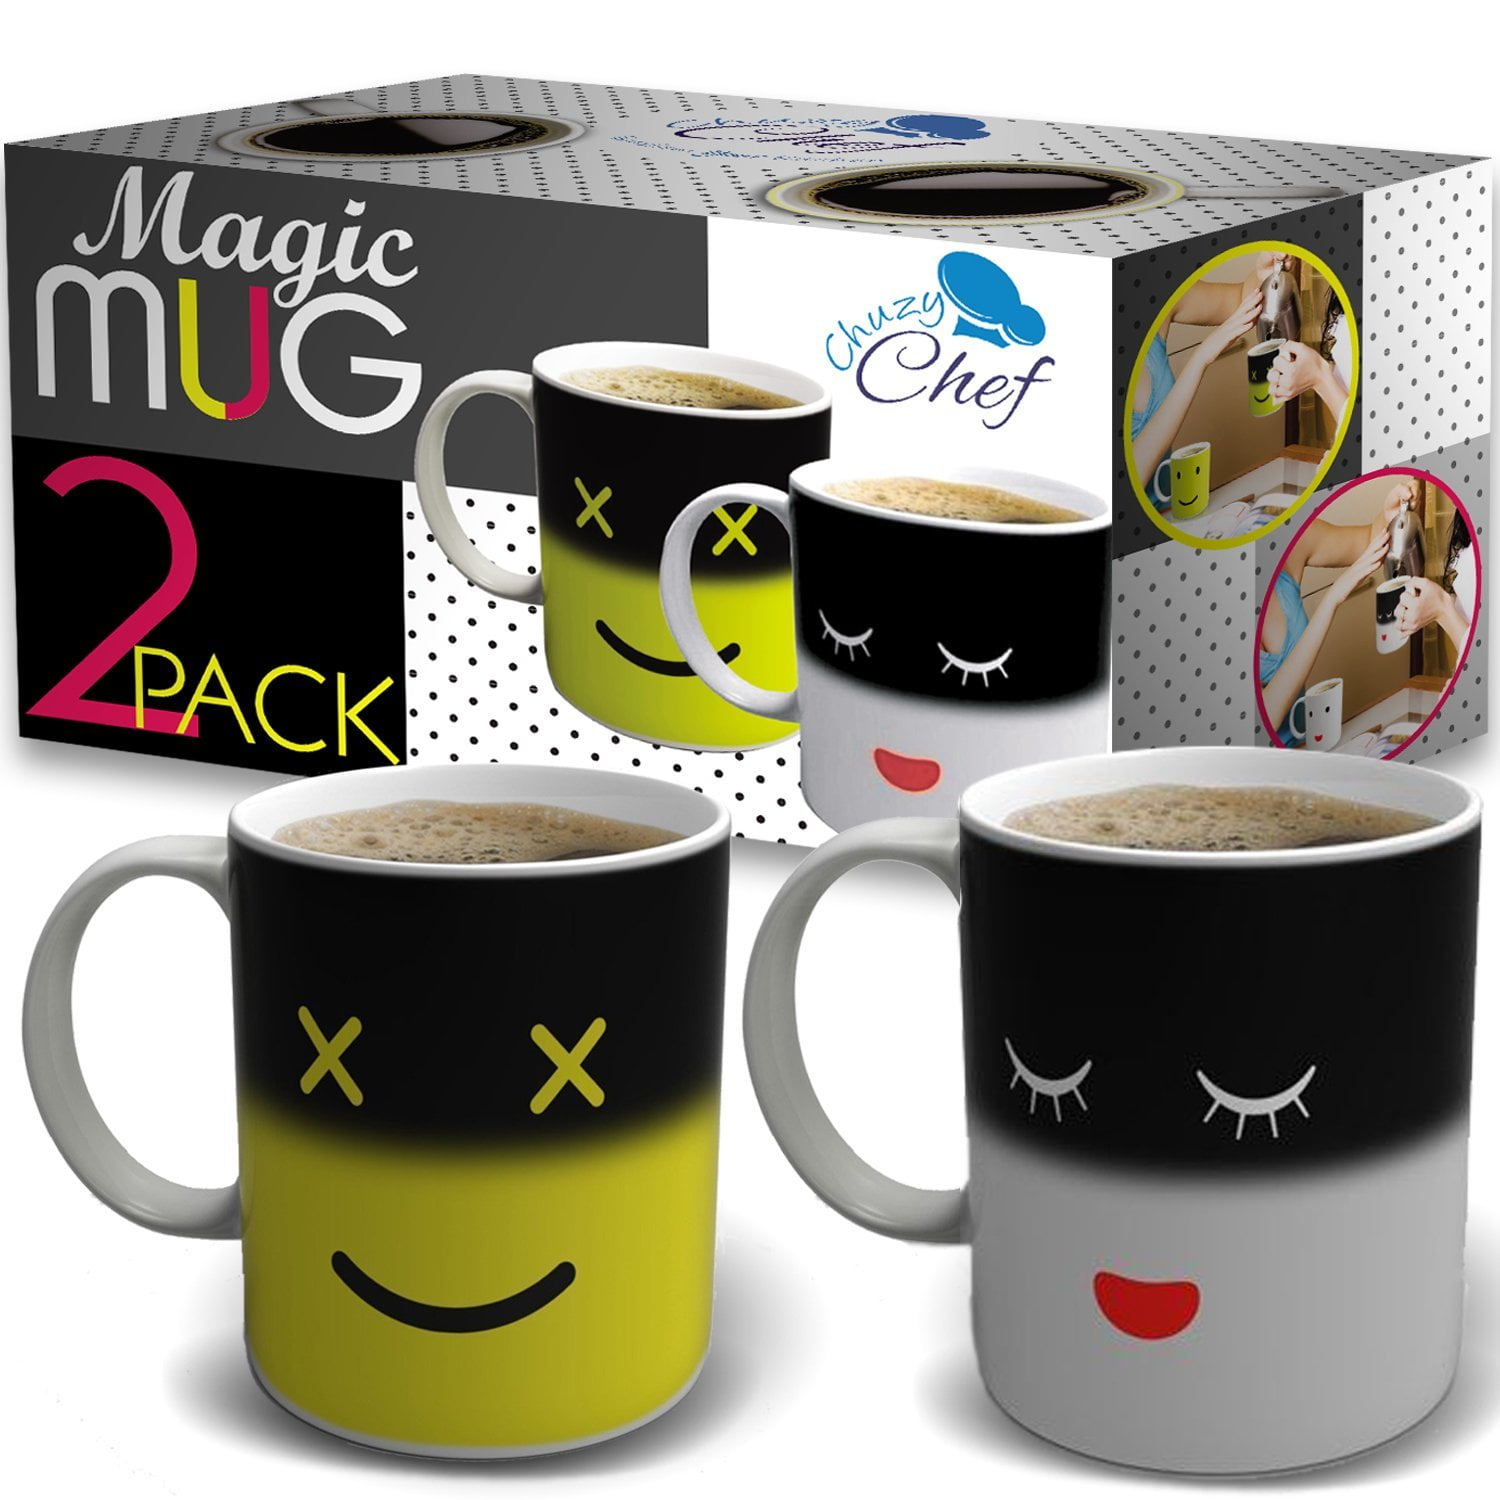 More Self Love White Enamel mug Fun Mug Pretty mug Cute mug For Her Gift Coffee mug